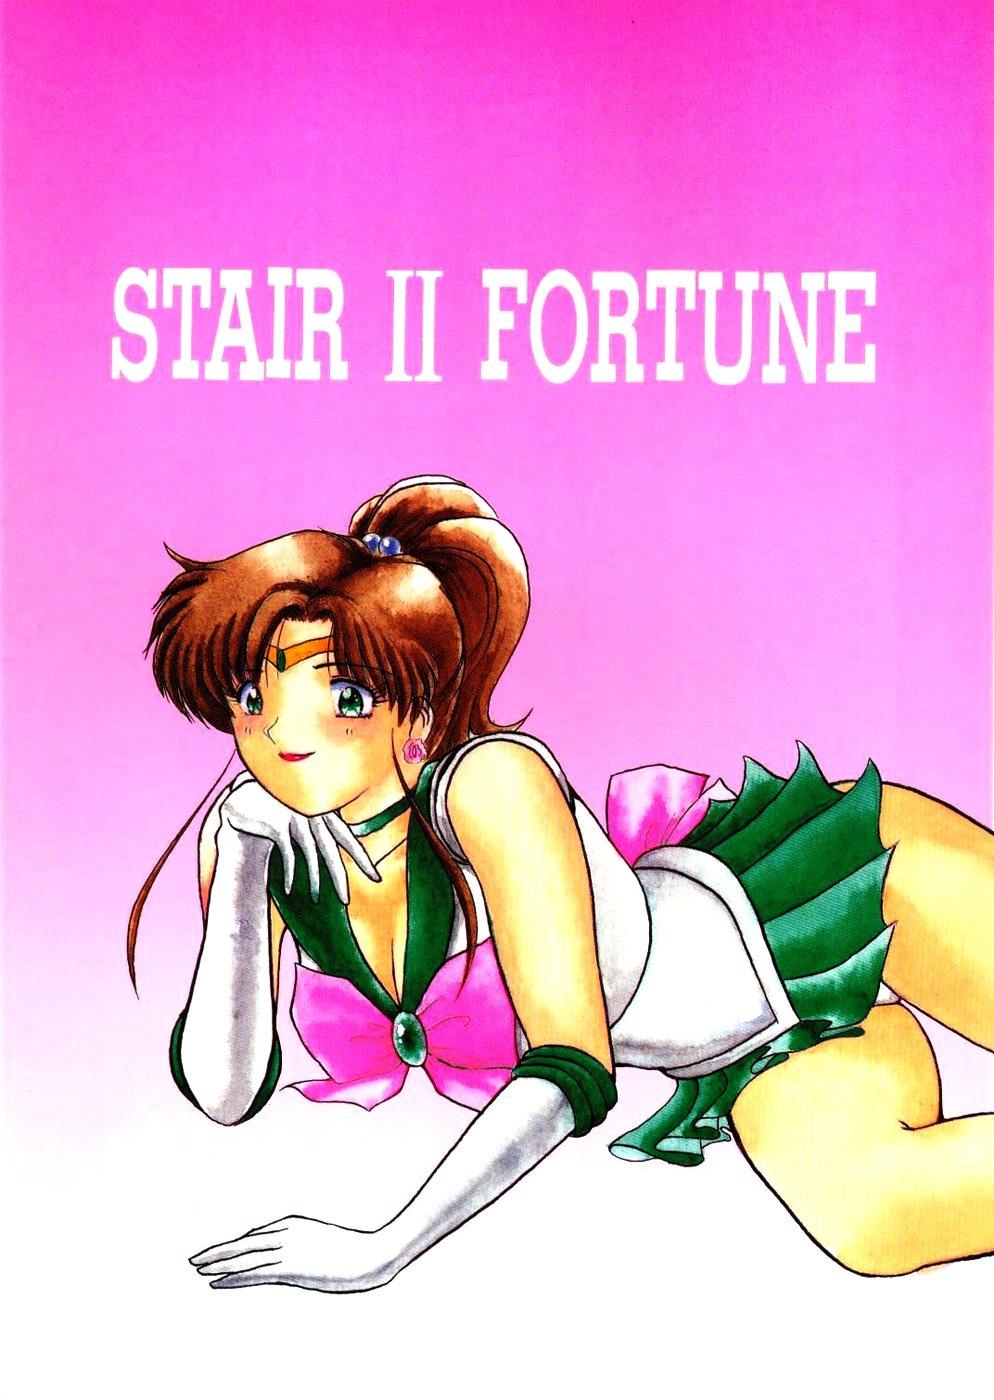 Sex STAIR II FORTUNE - Sailor moon Cornudo - Page 1